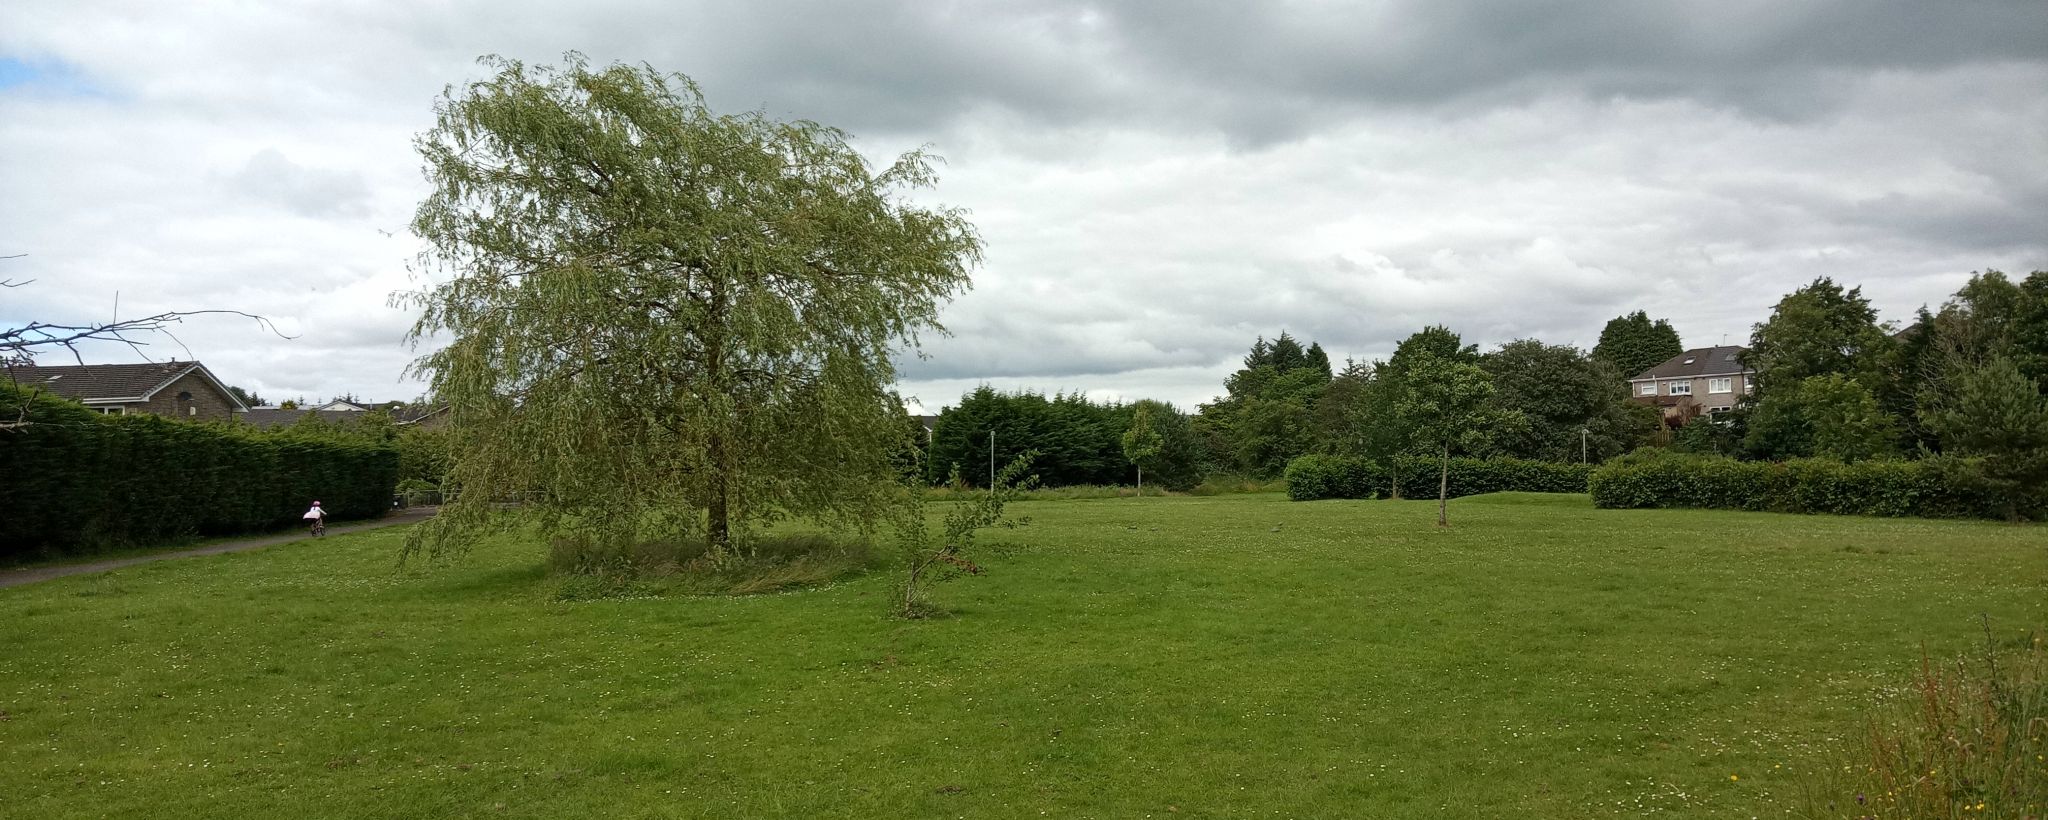 Playing field at Kilmardinny / Burnbrae